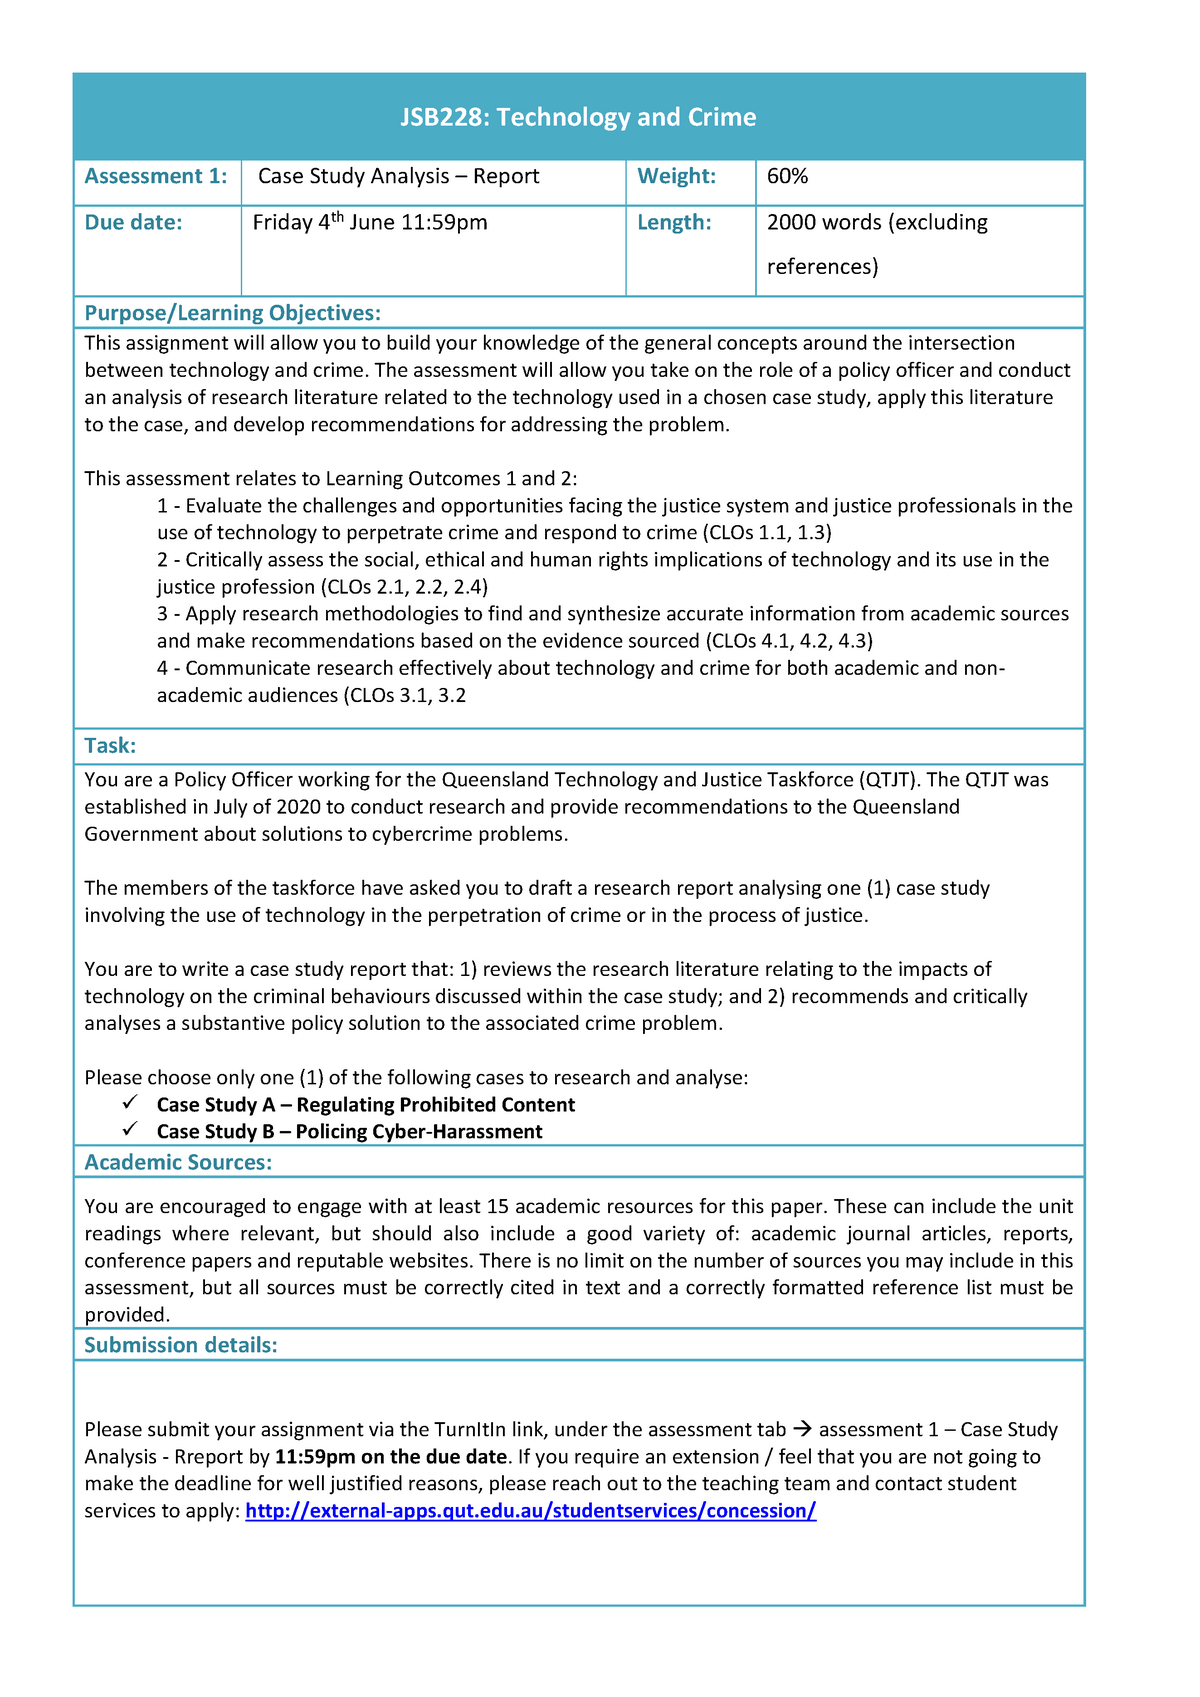 JSB228 2021 Assessment 2 Task Sheet - Case Study Analysis - Report ...